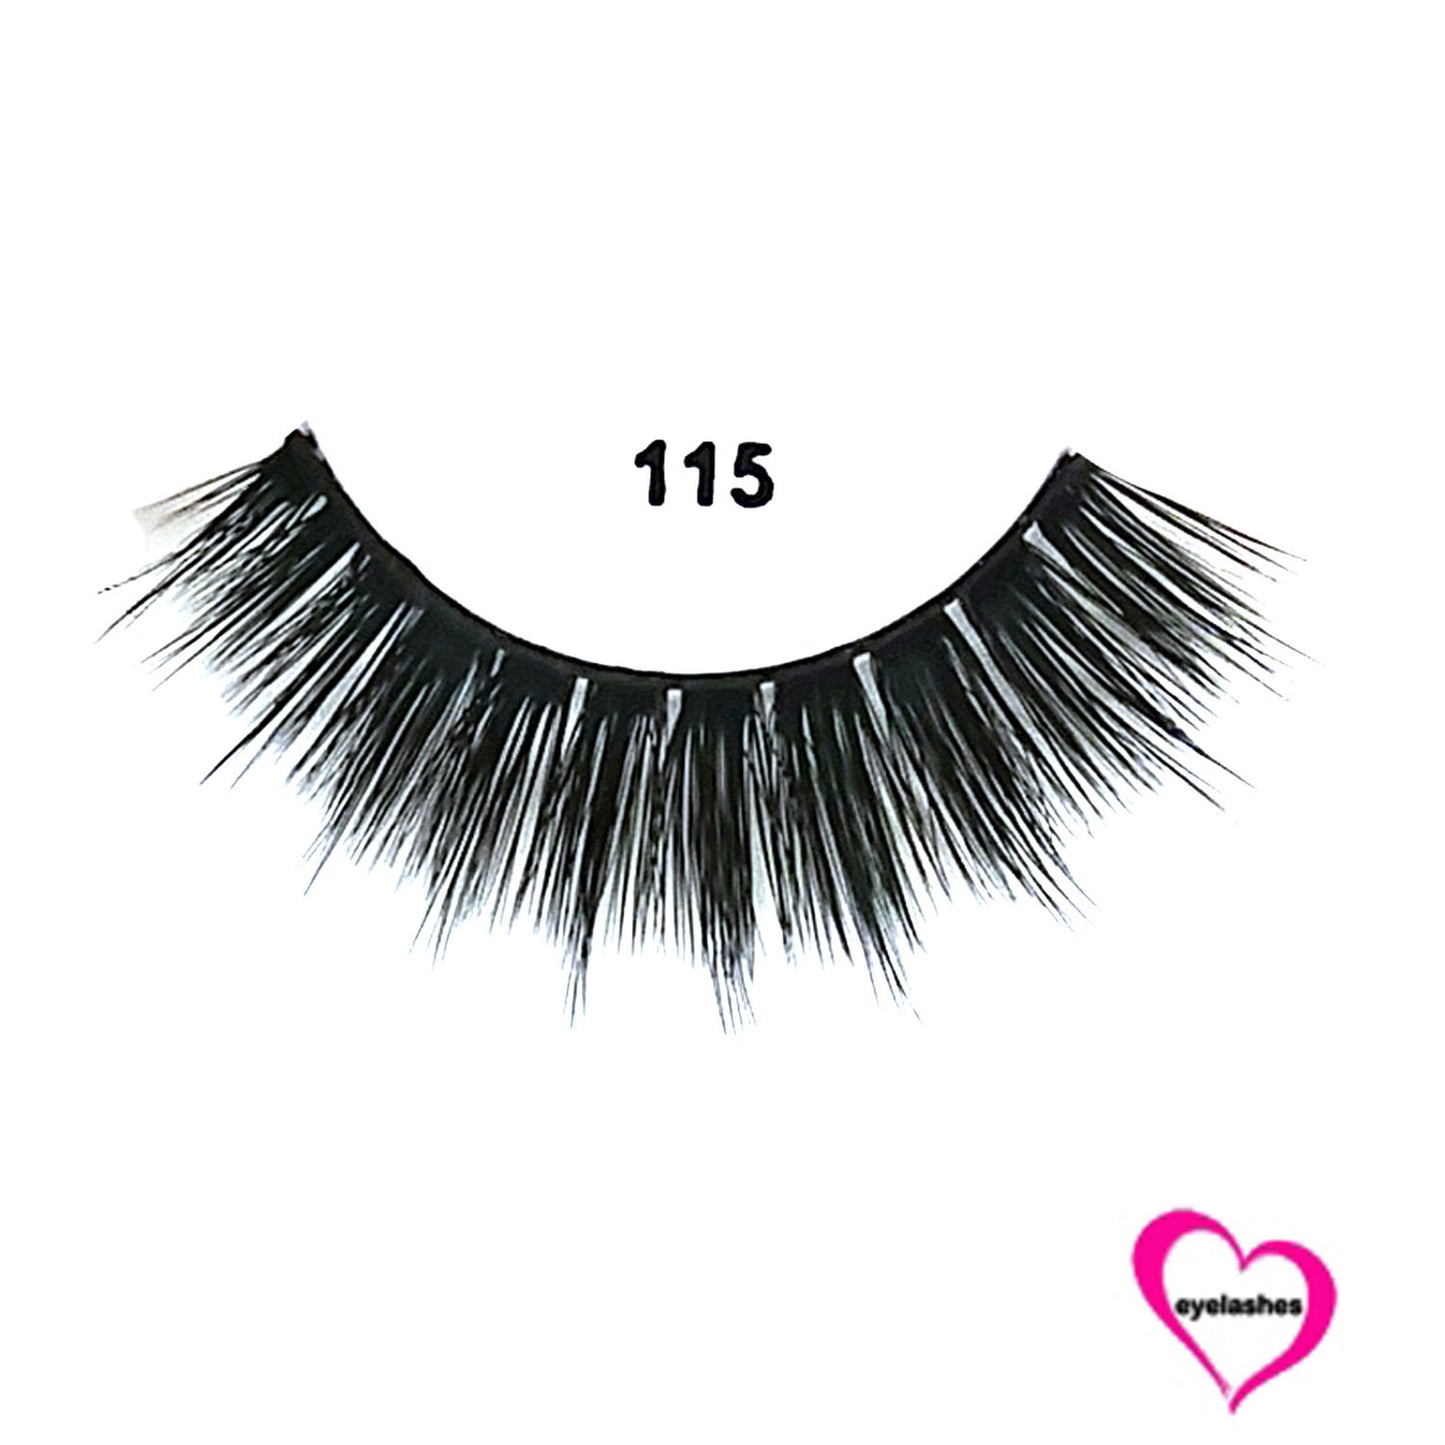 i-Envy 3D Collection Eyelashes 115